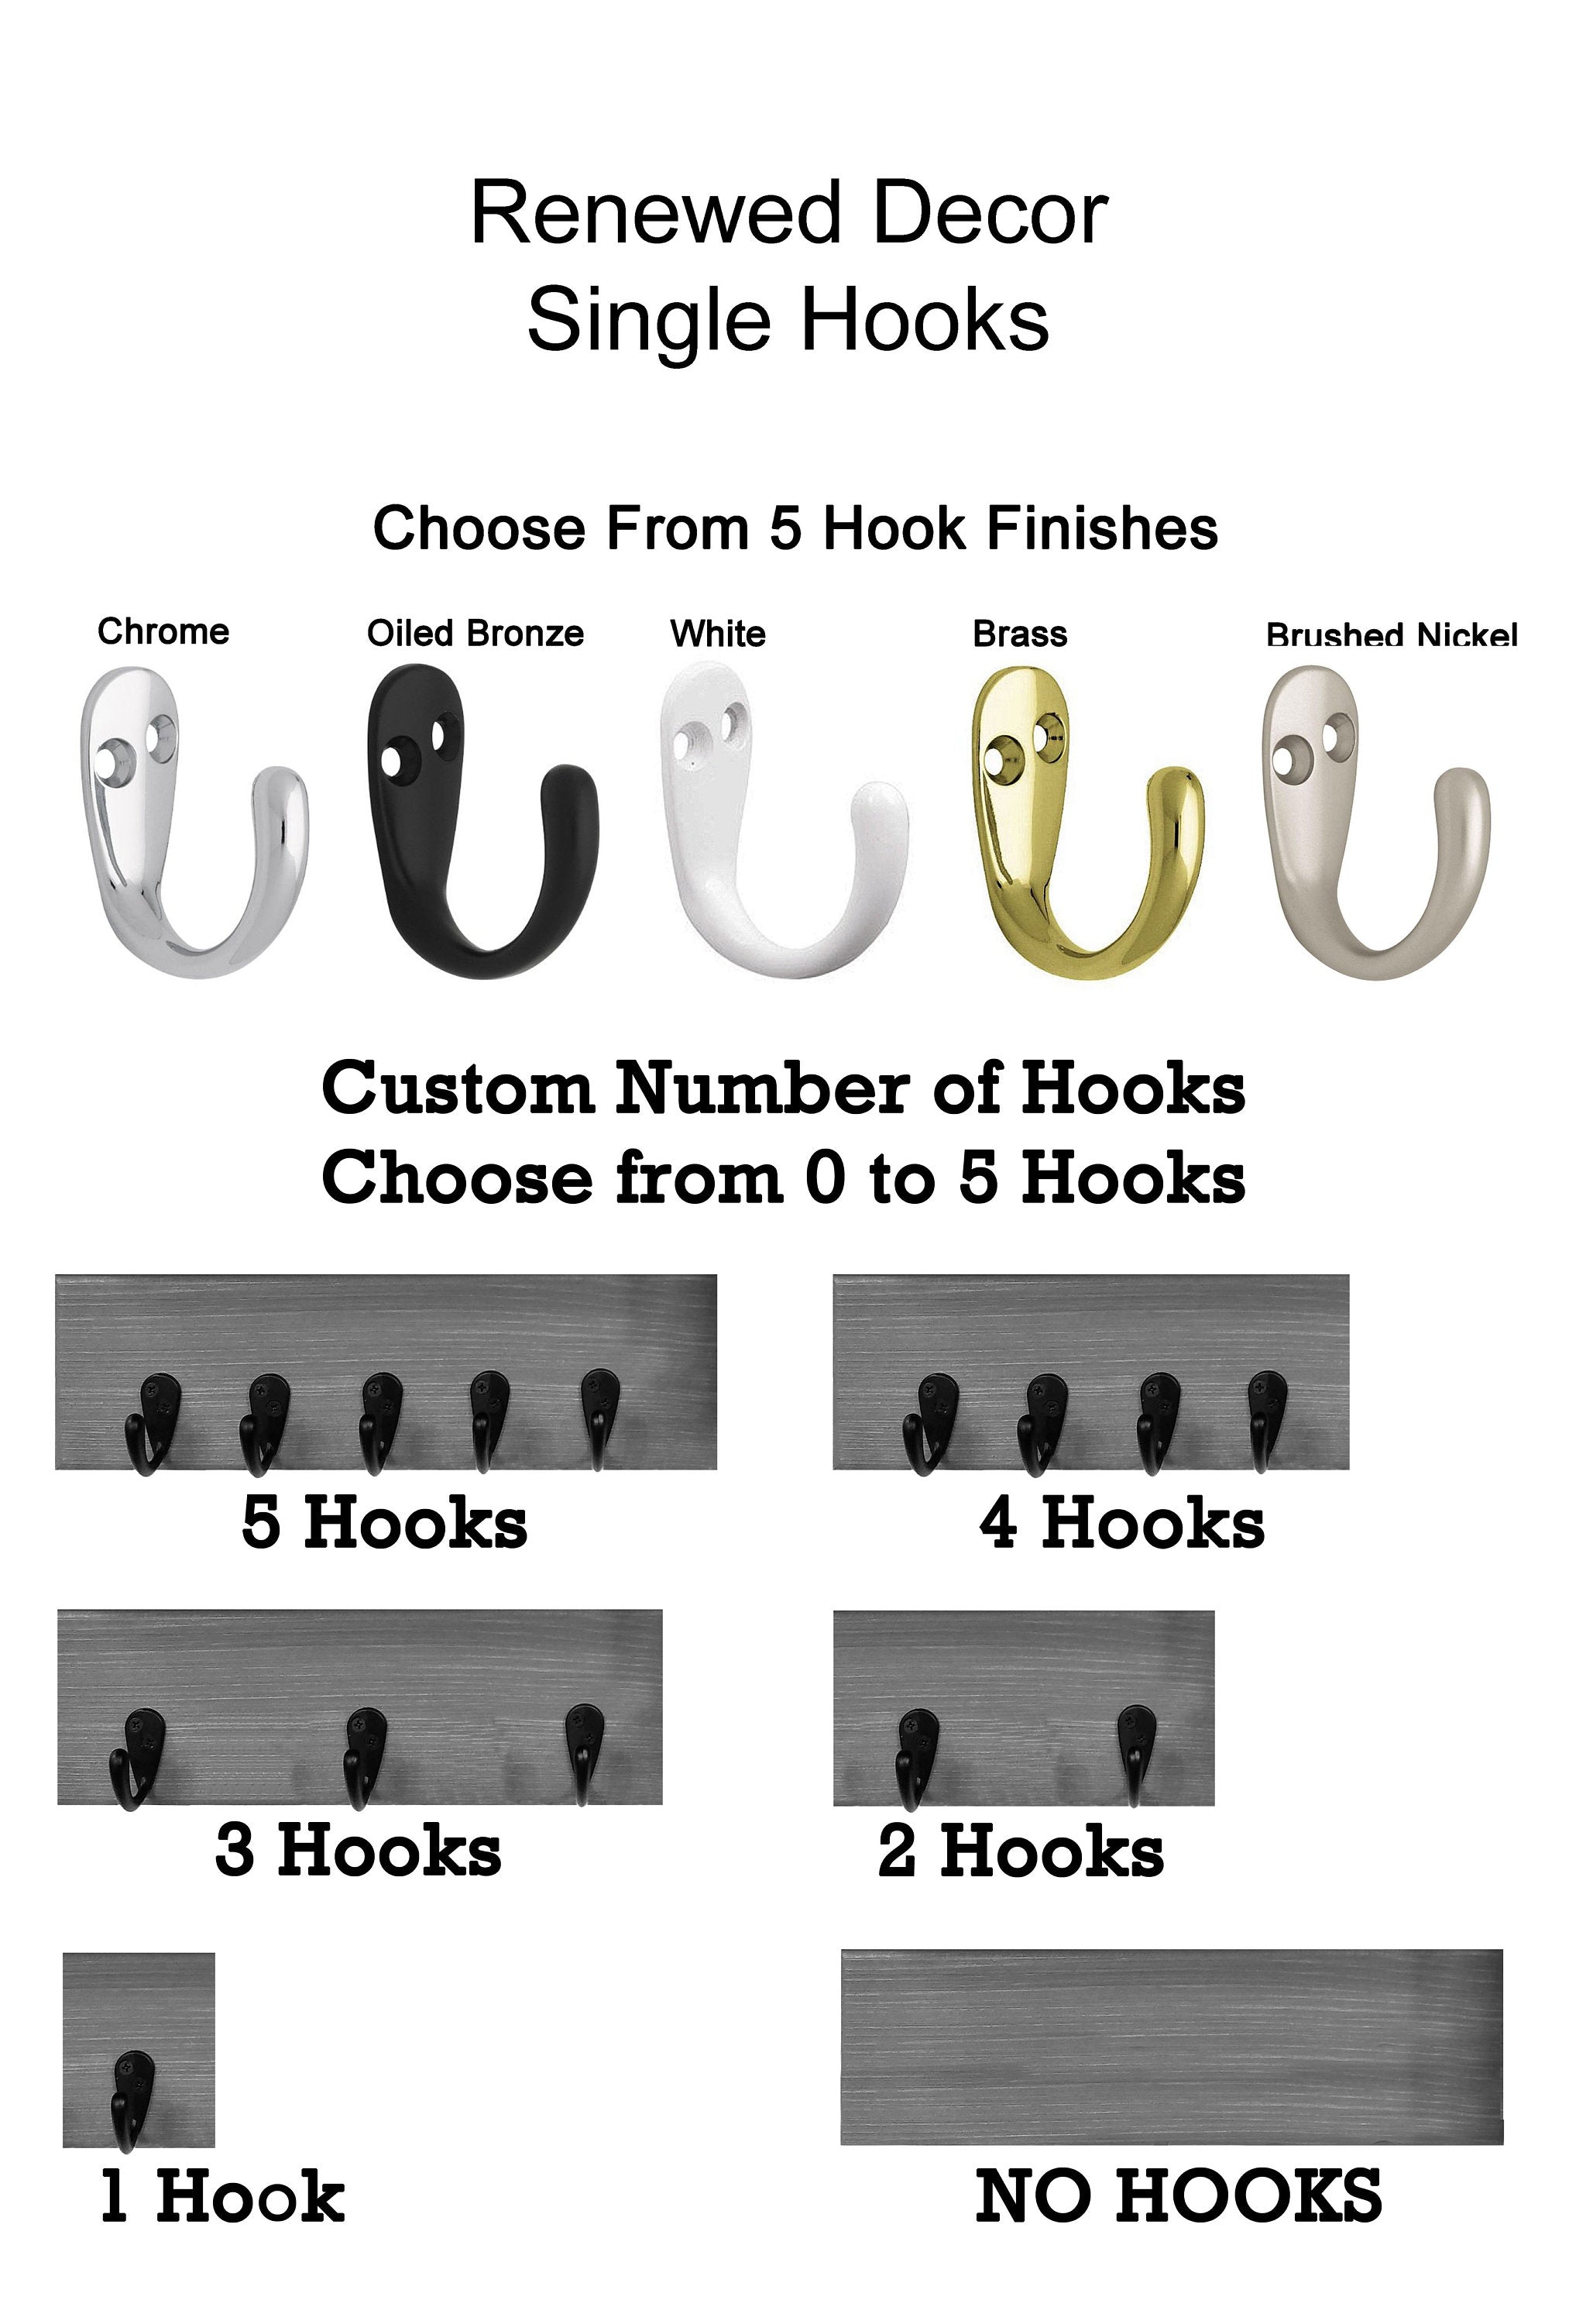 Choose 0 to 5 Single Hooks 5 Finishes Oiled Bronze, Nickel, Chrome, Brass, White